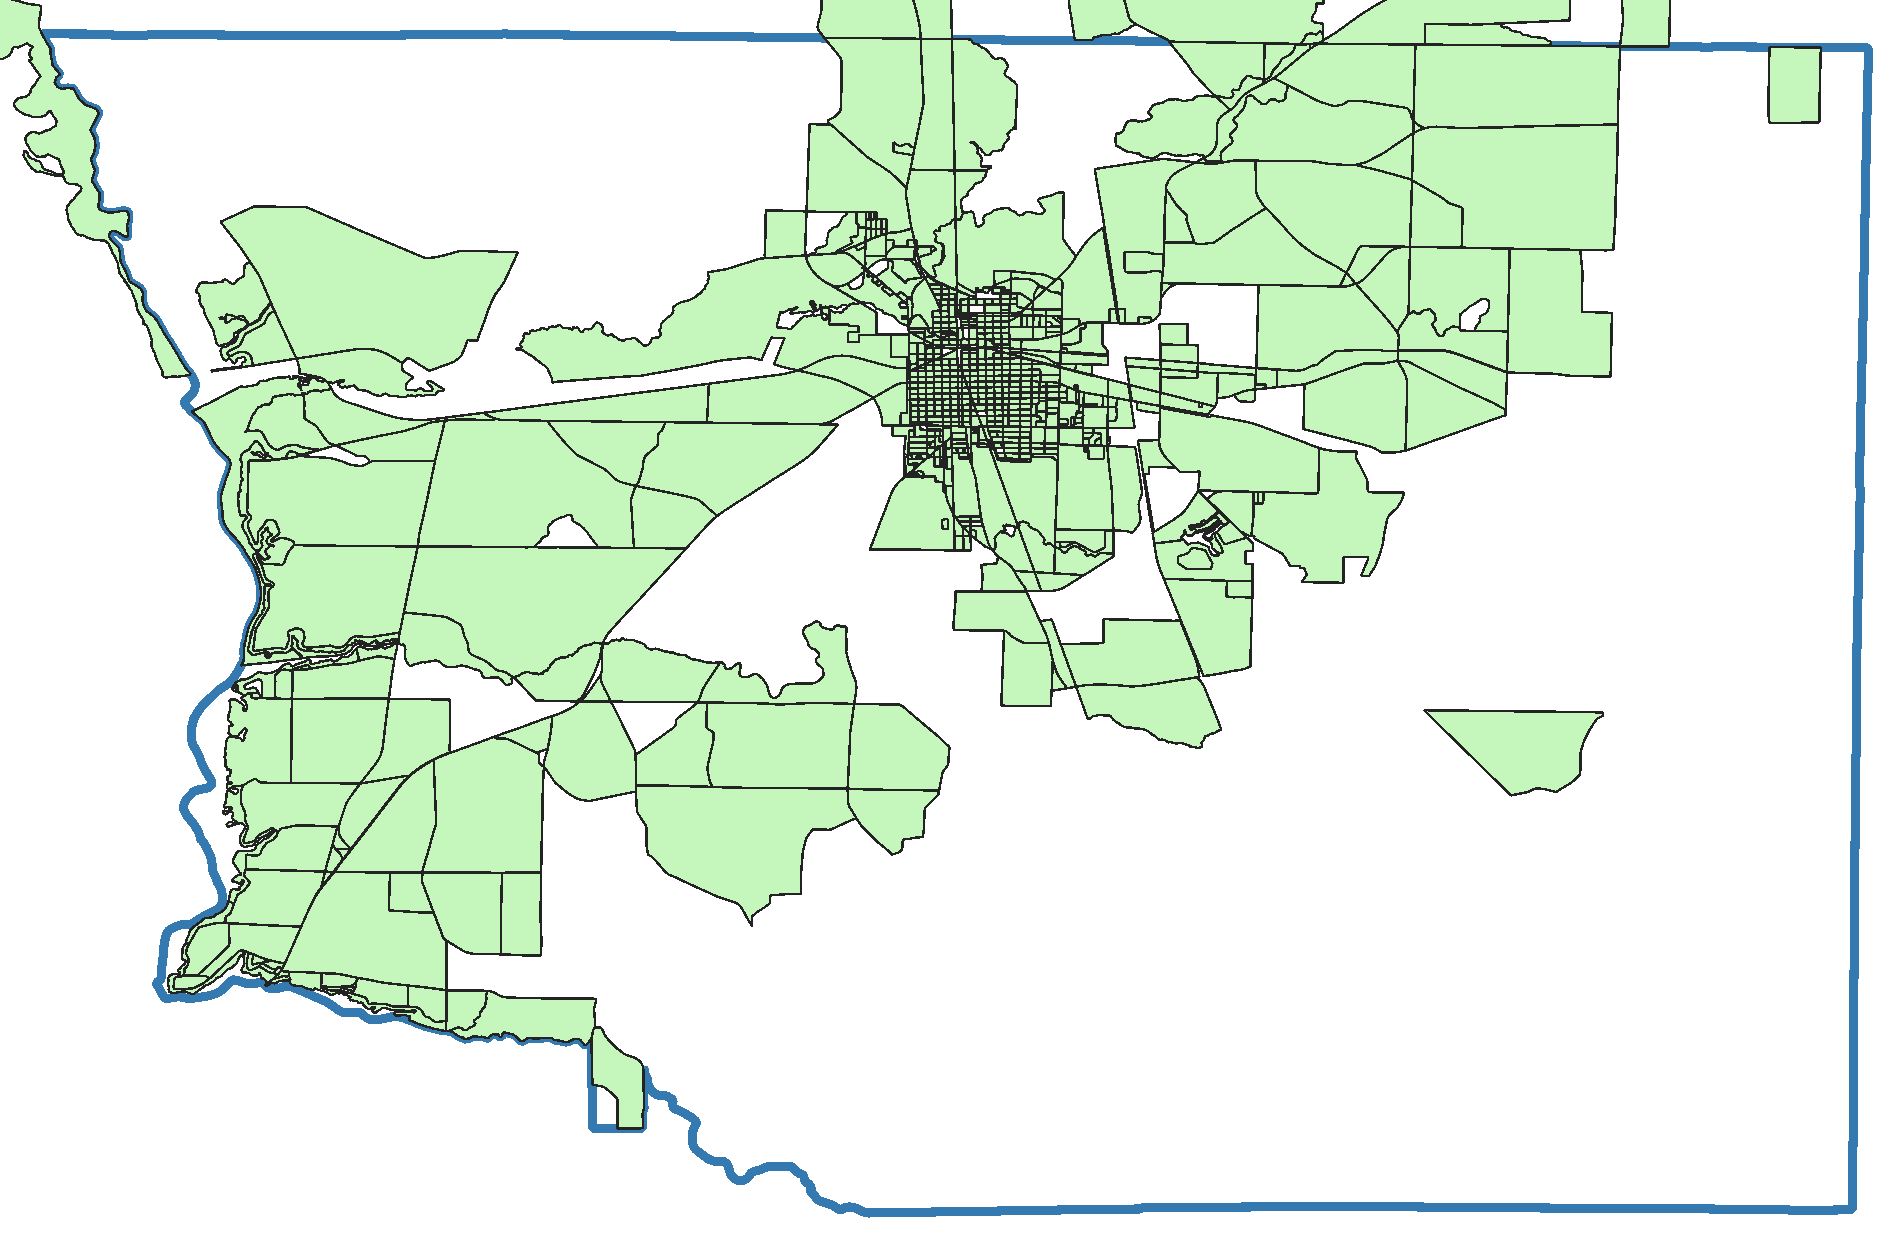 Served Areas of Incumbent Fiber Providers in Crisp County, GA.